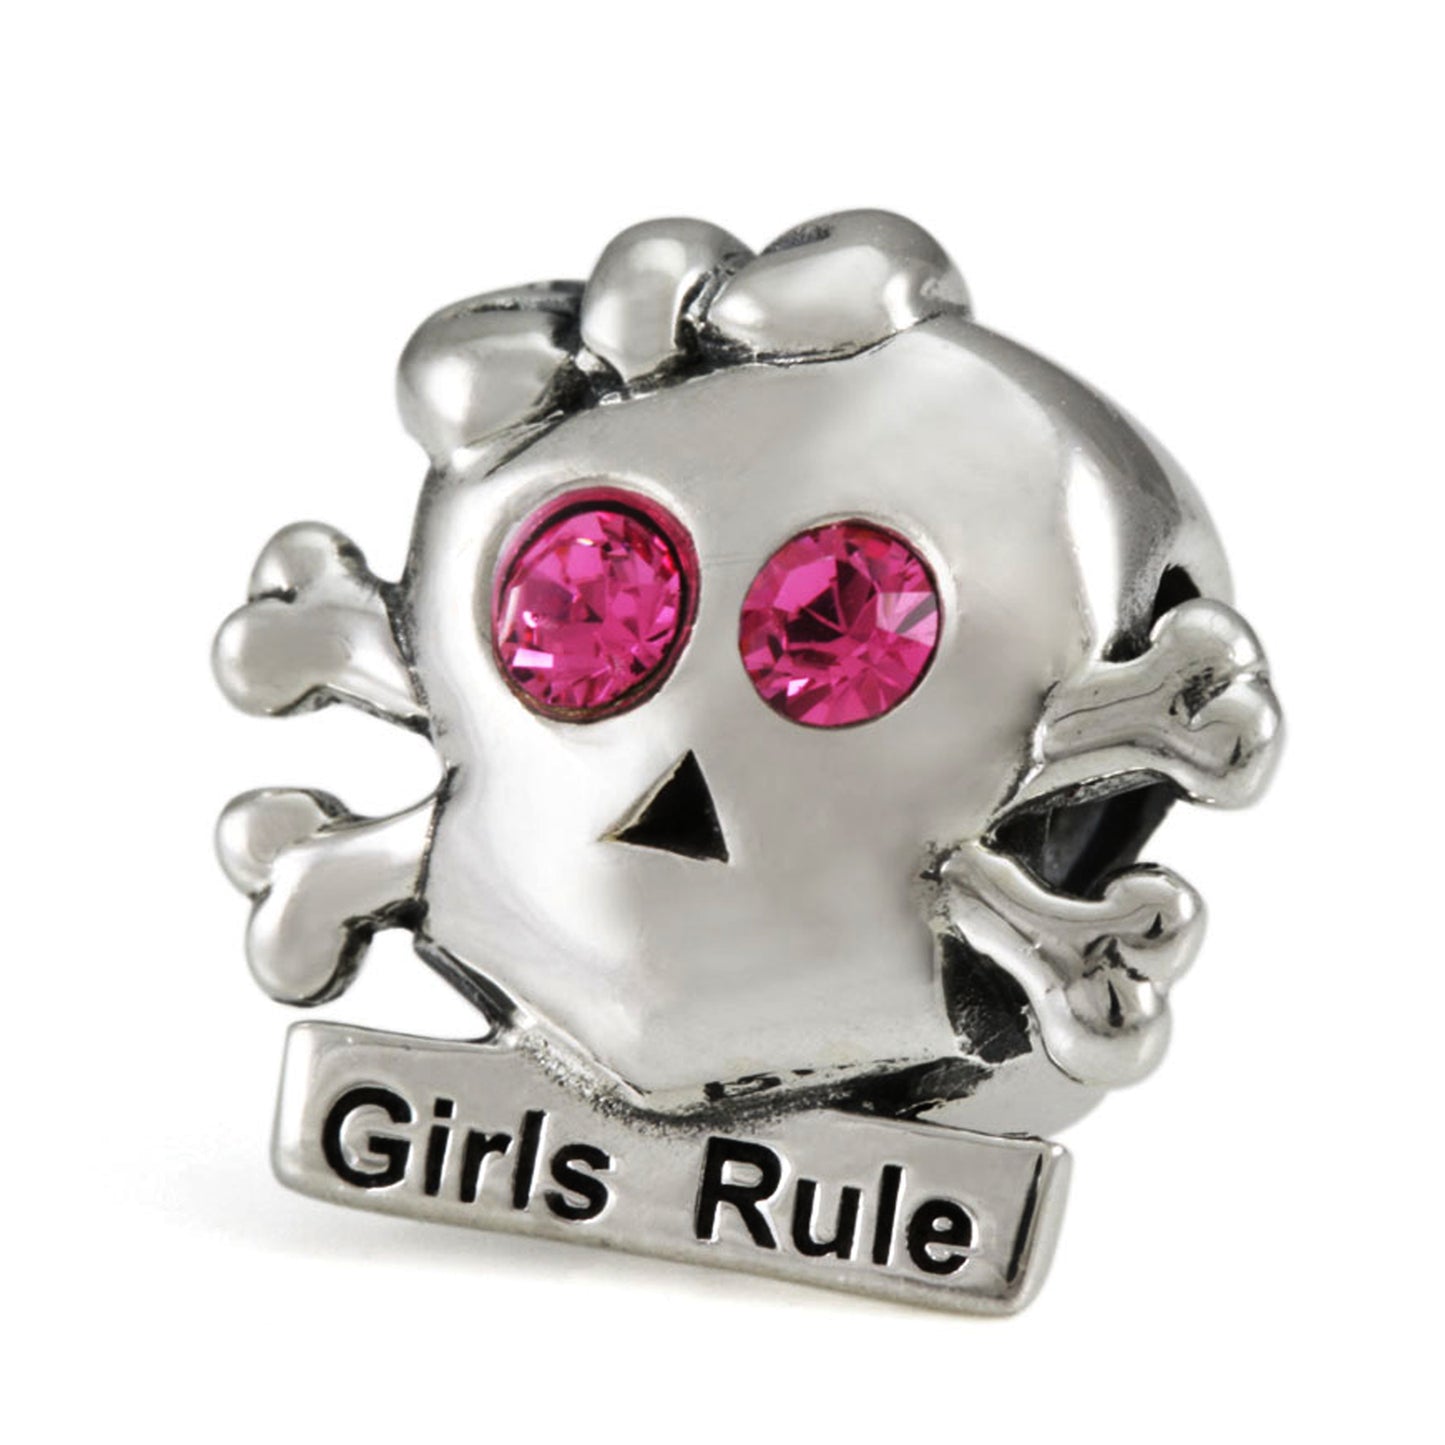 Girls Rule (Retired)